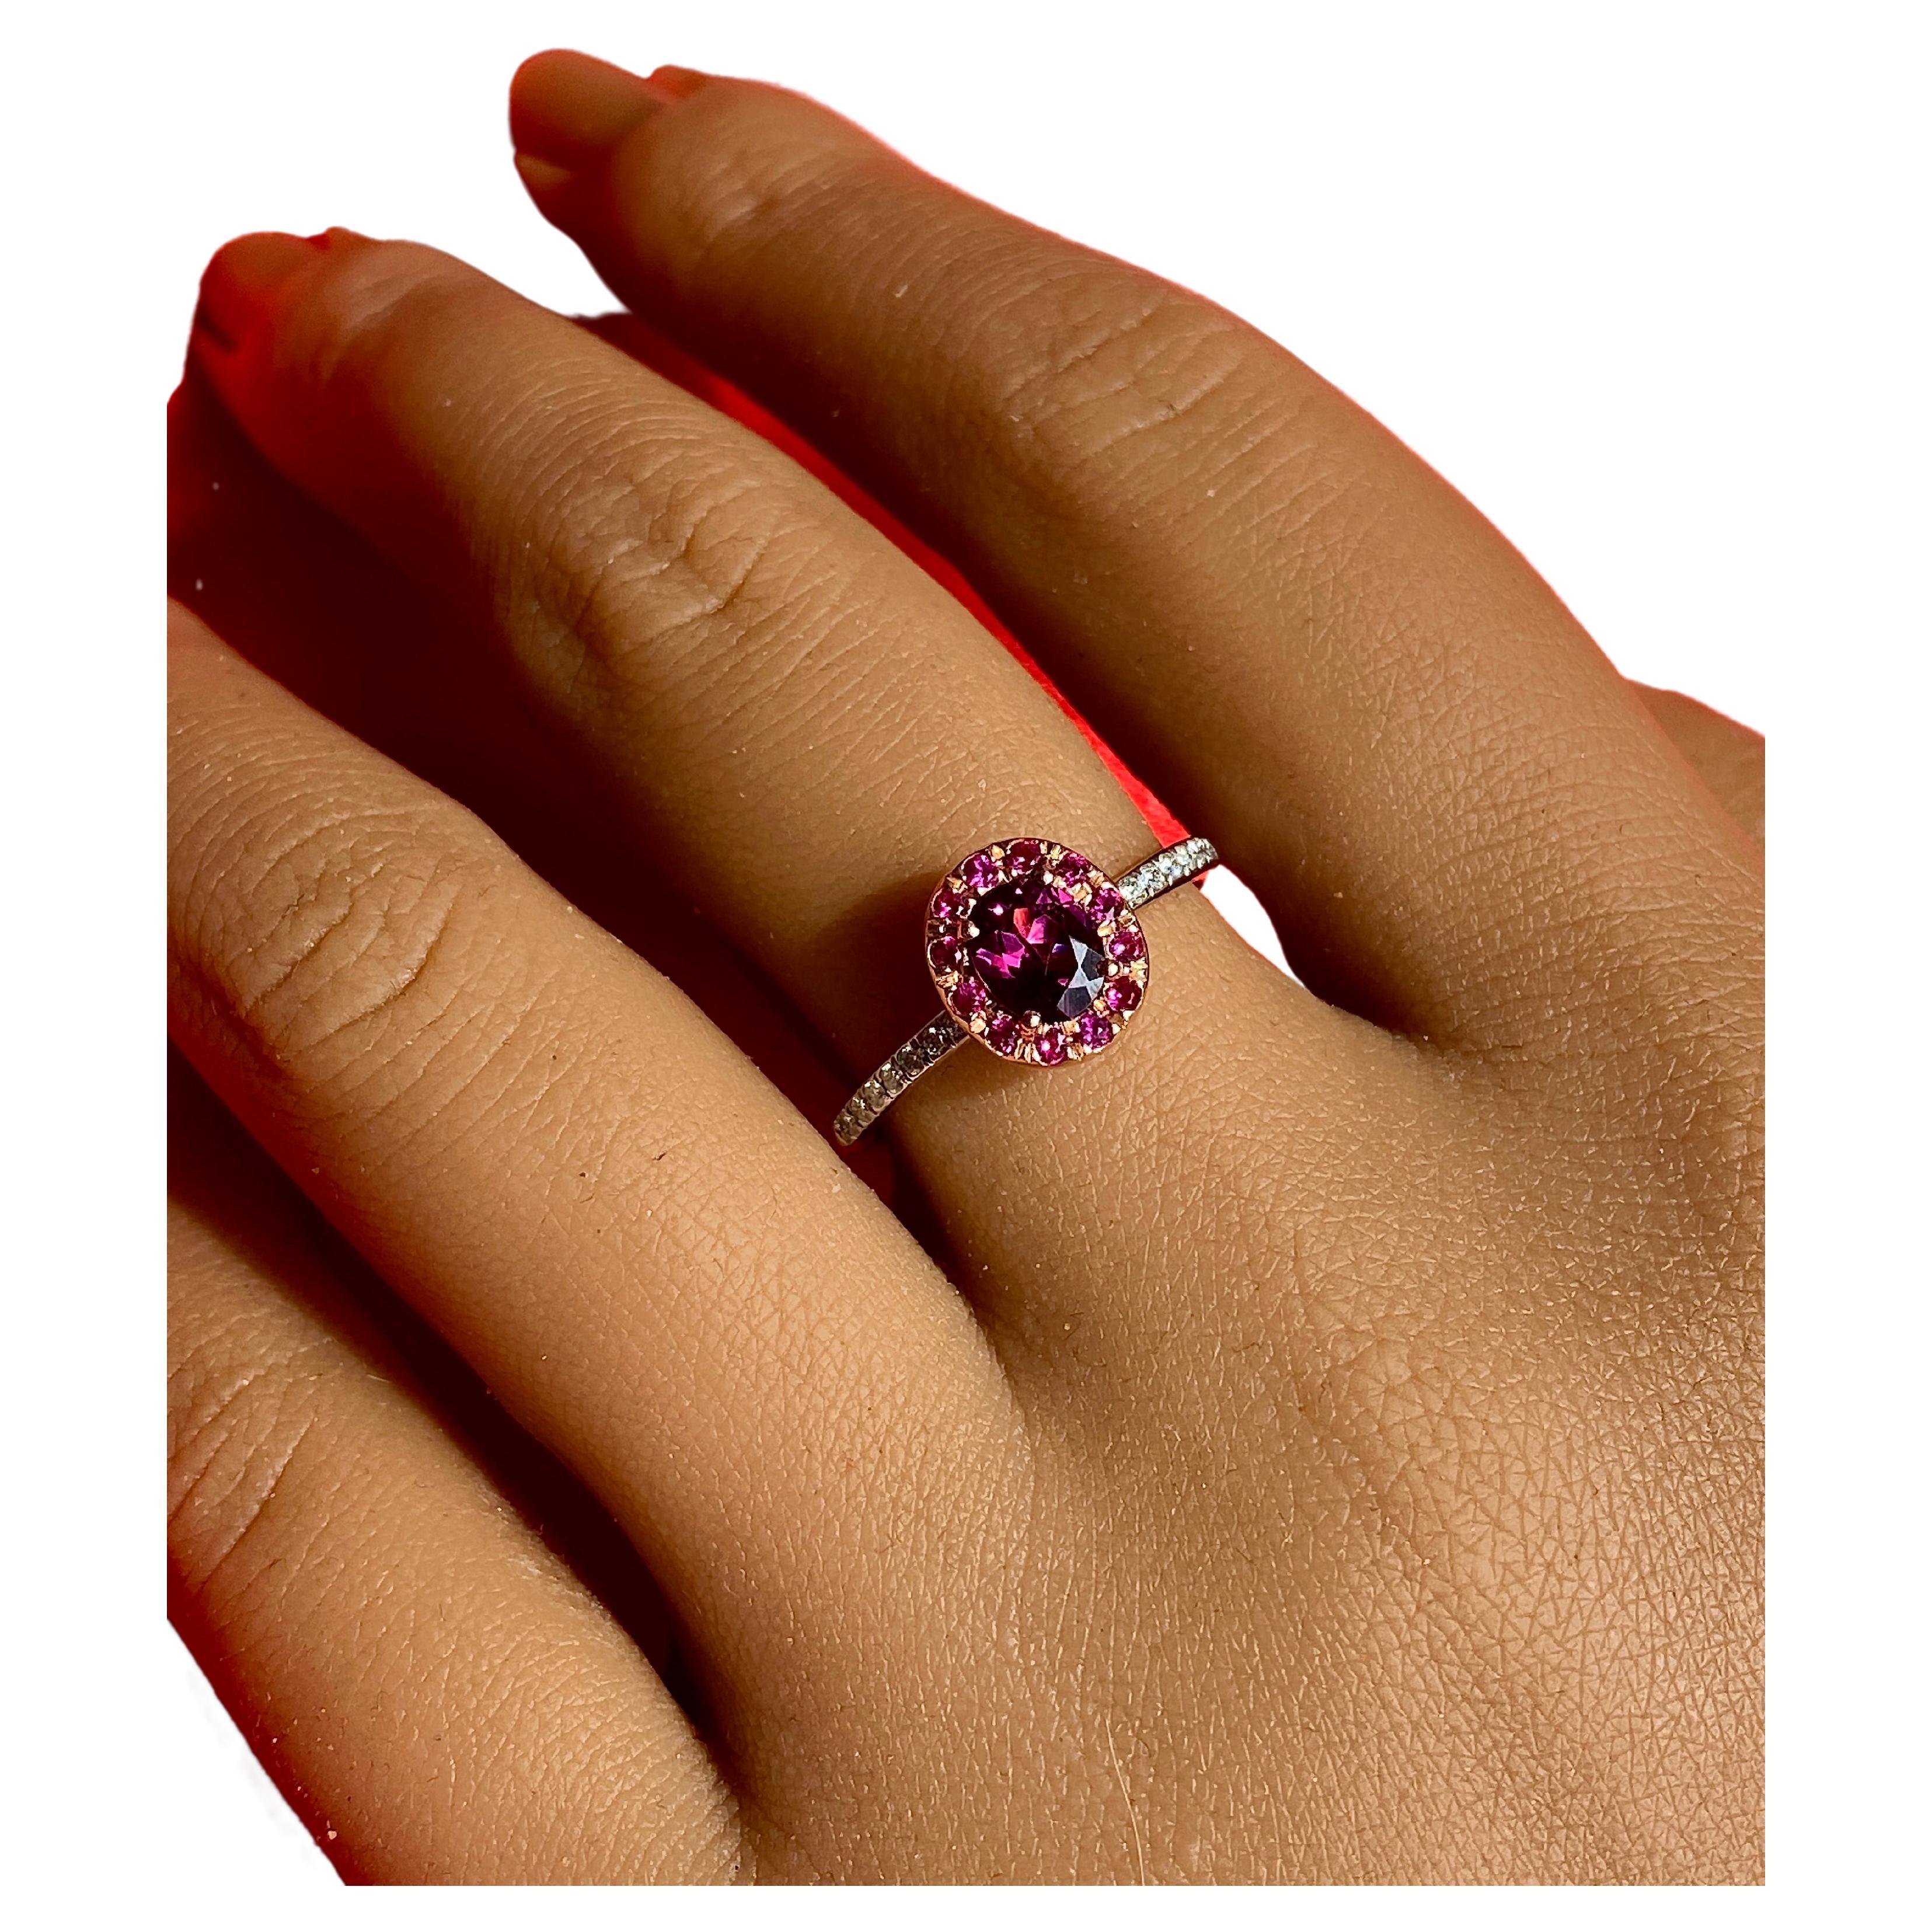 Lila Granat und Diamant Solitär Ring, Natürlicher Edelstein Solitär Ring Gold